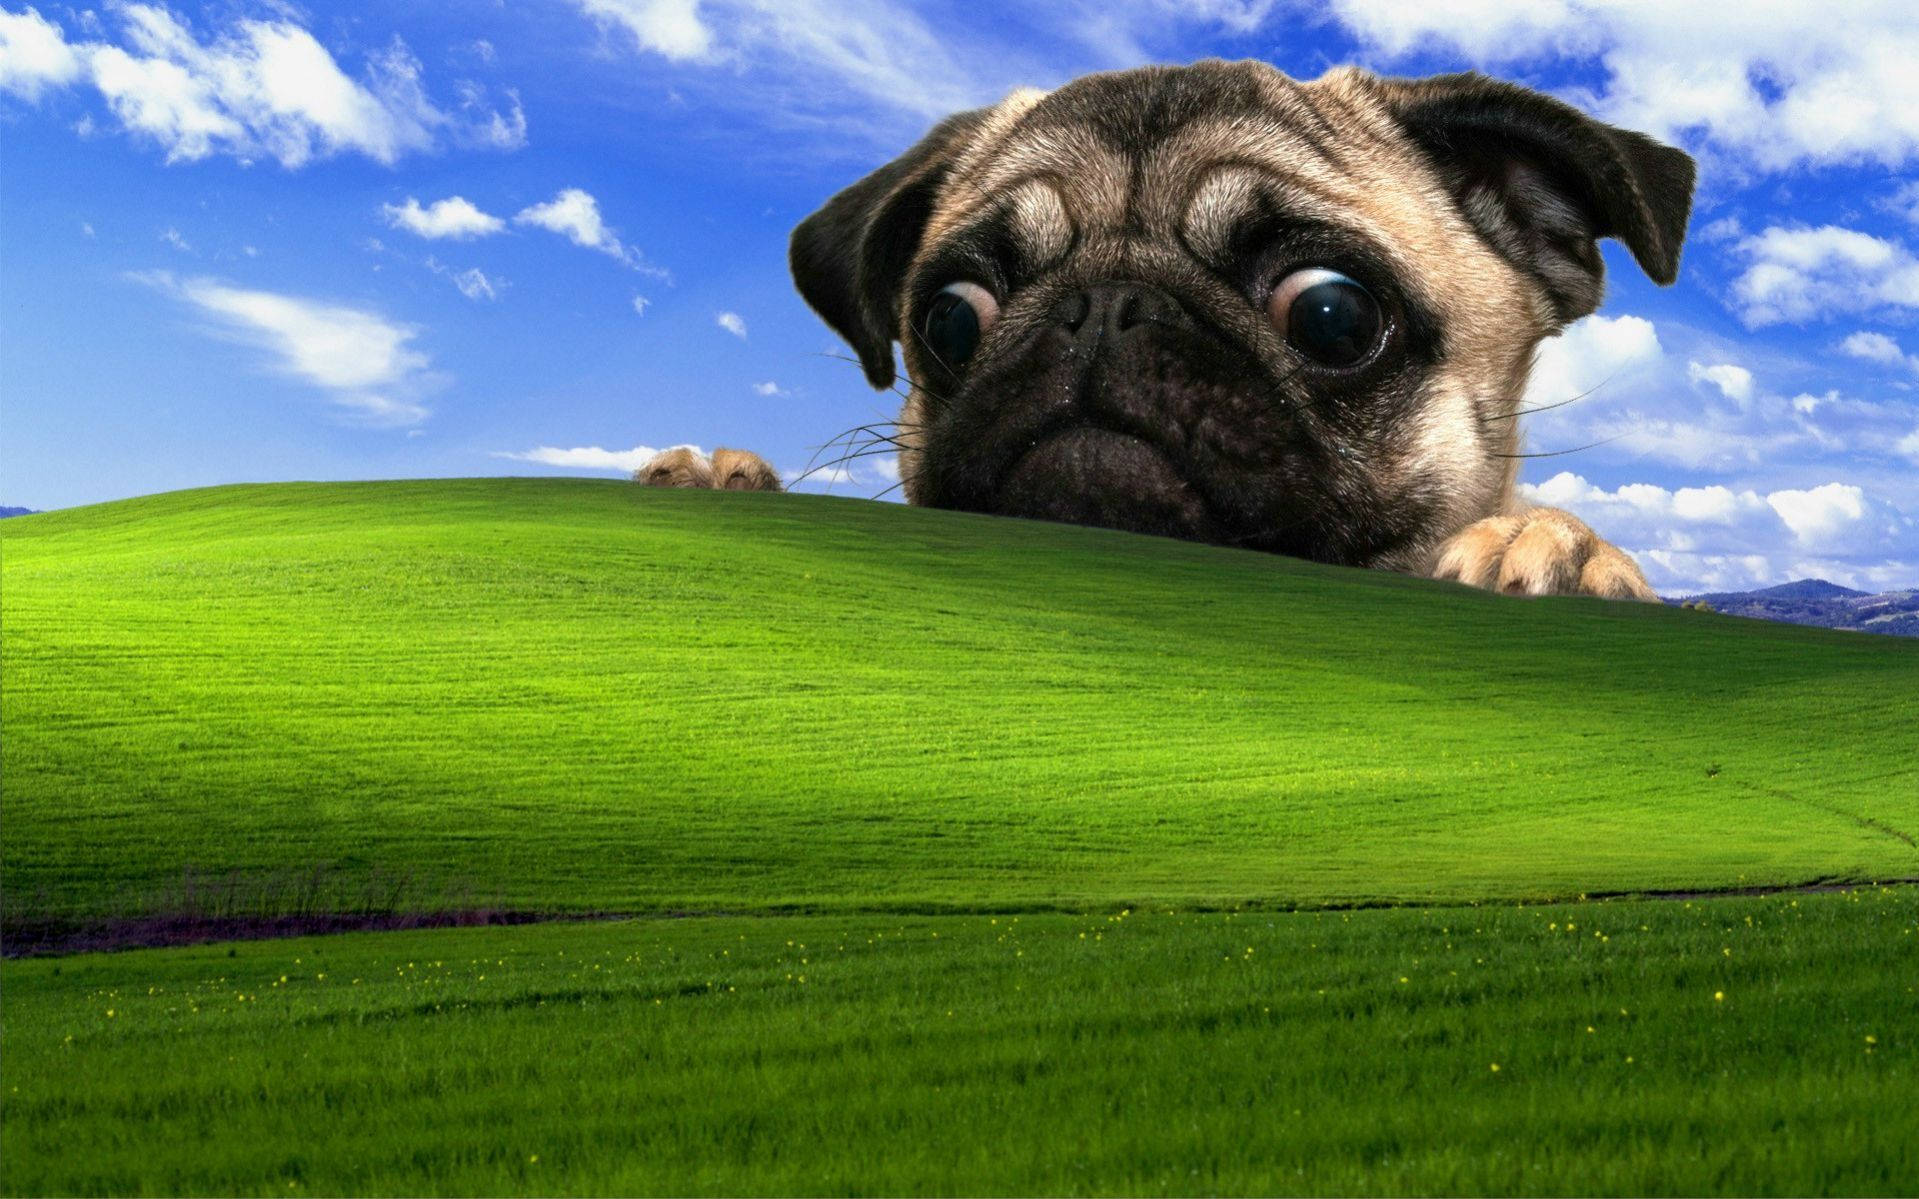 A Pug Dog Peeking Out Of A Green Field